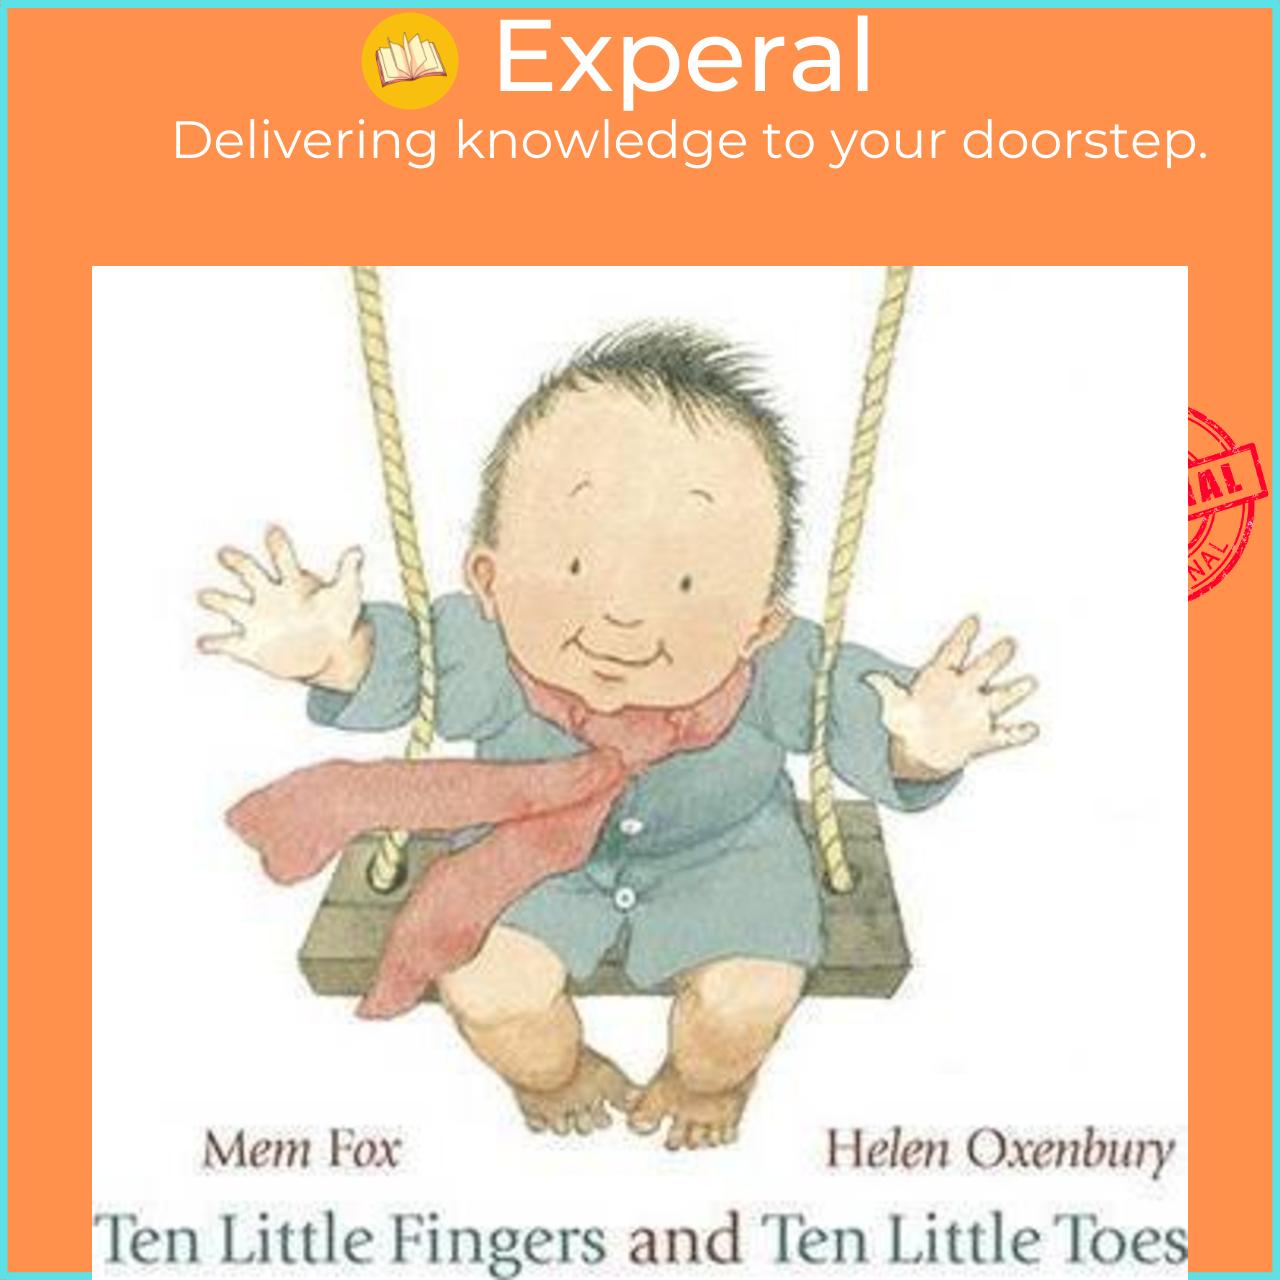 Sách - Ten Little Fingers and Ten Little Toes by Mem Fox (UK edition, paperback)